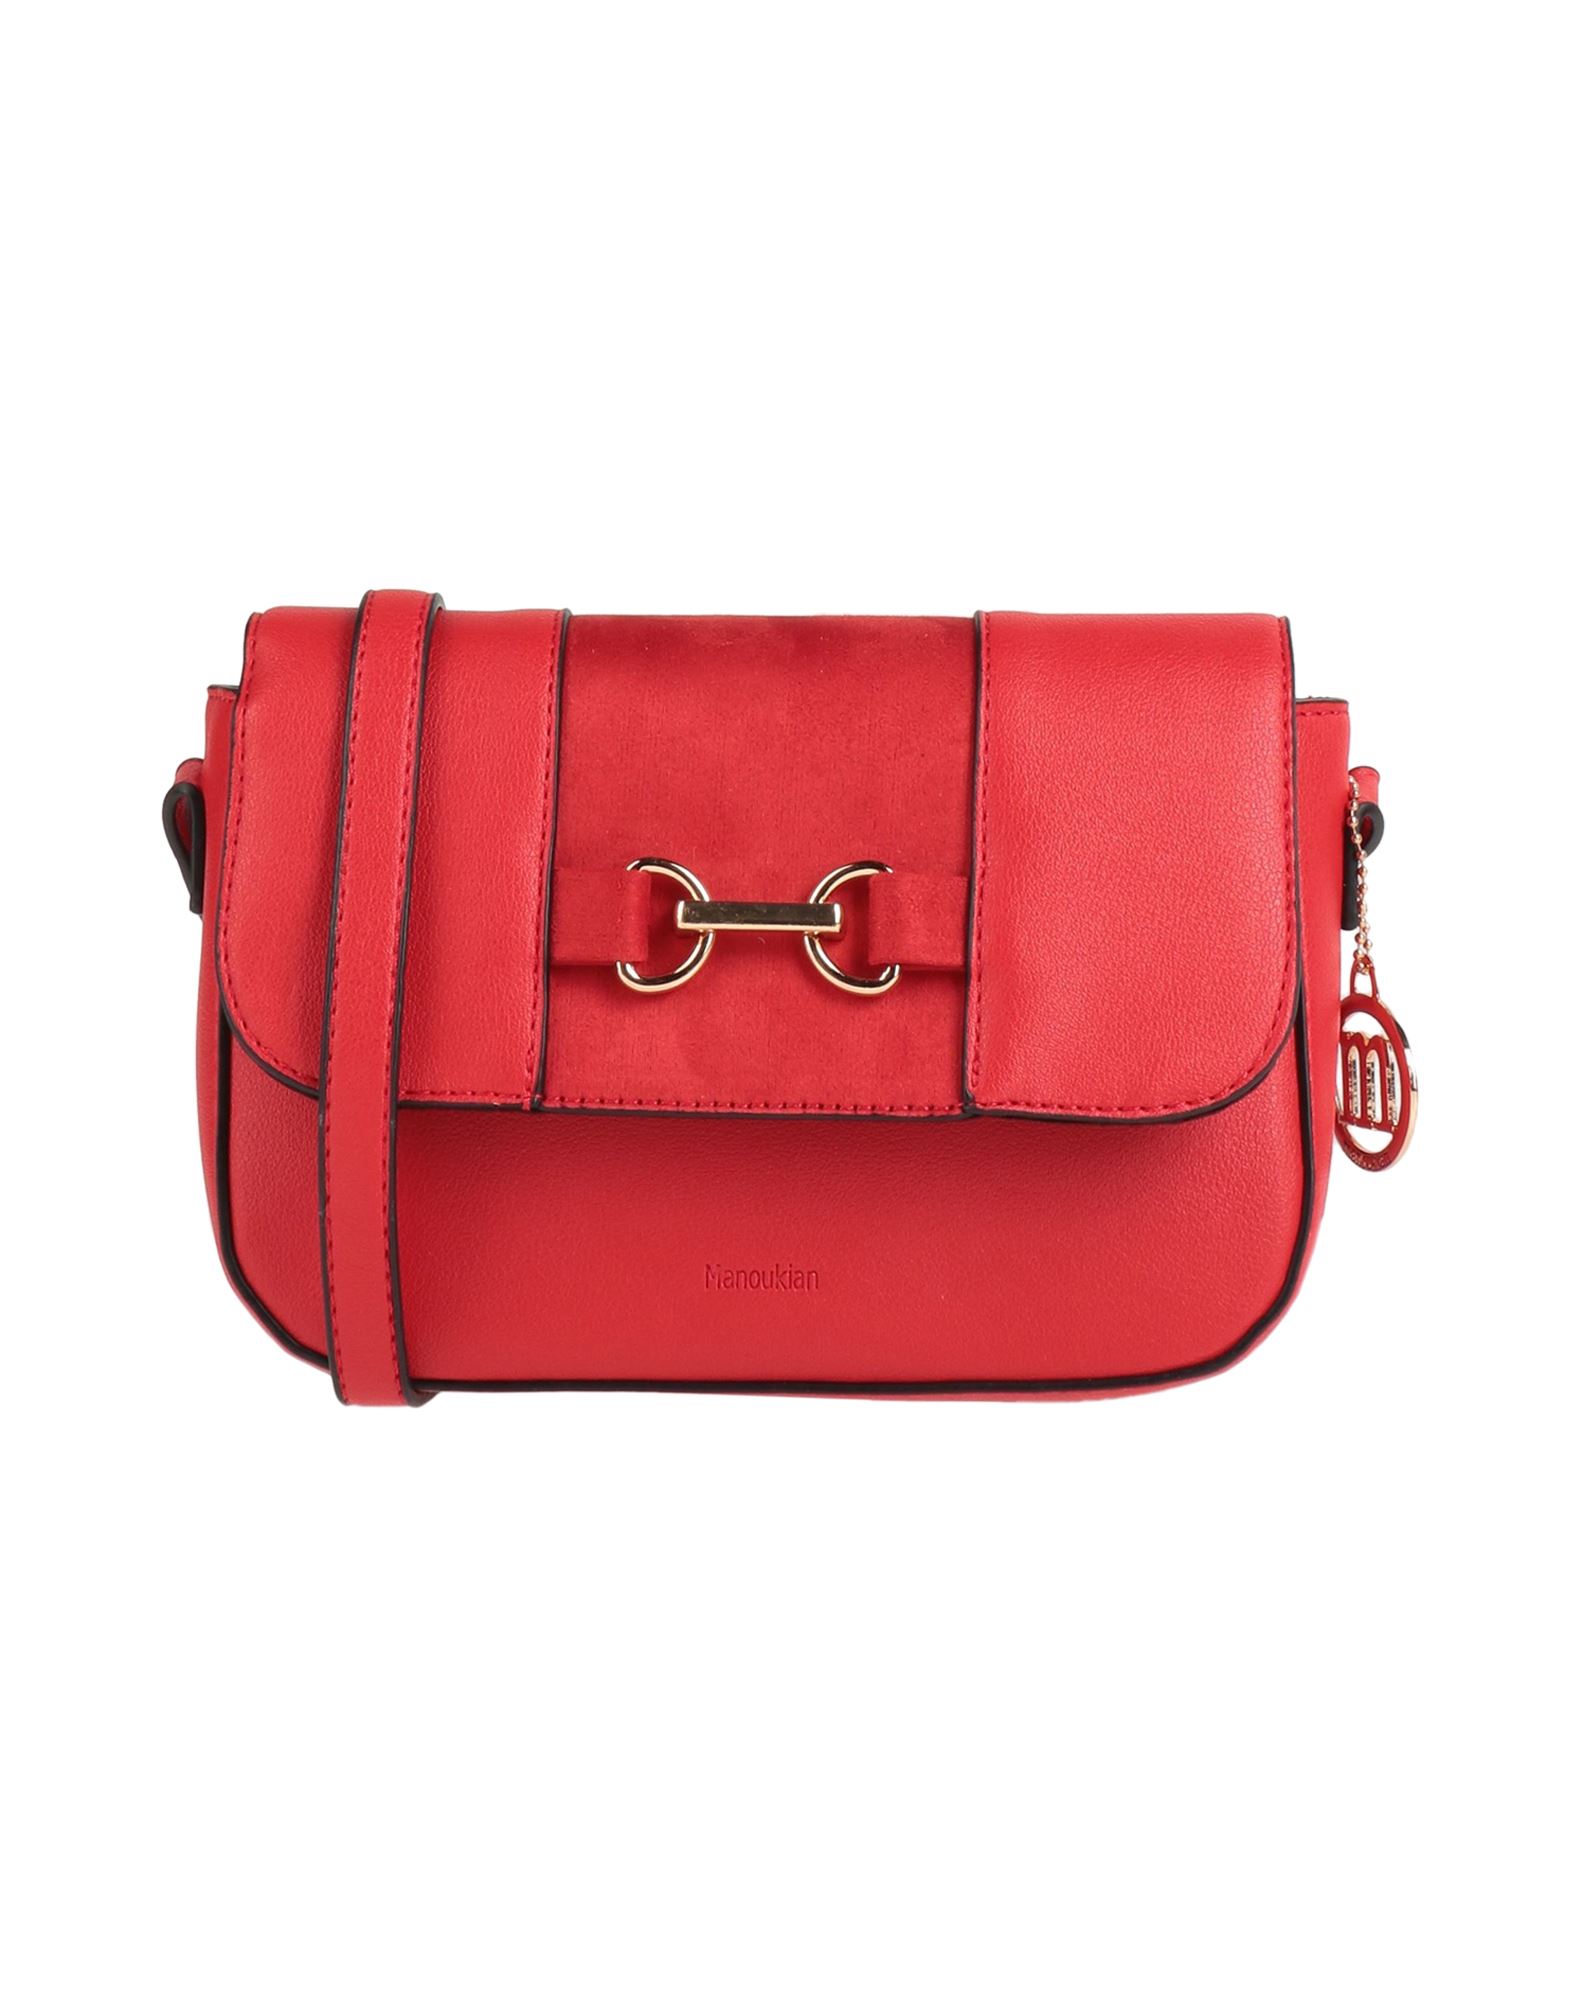 Manoukian Handbags In Red